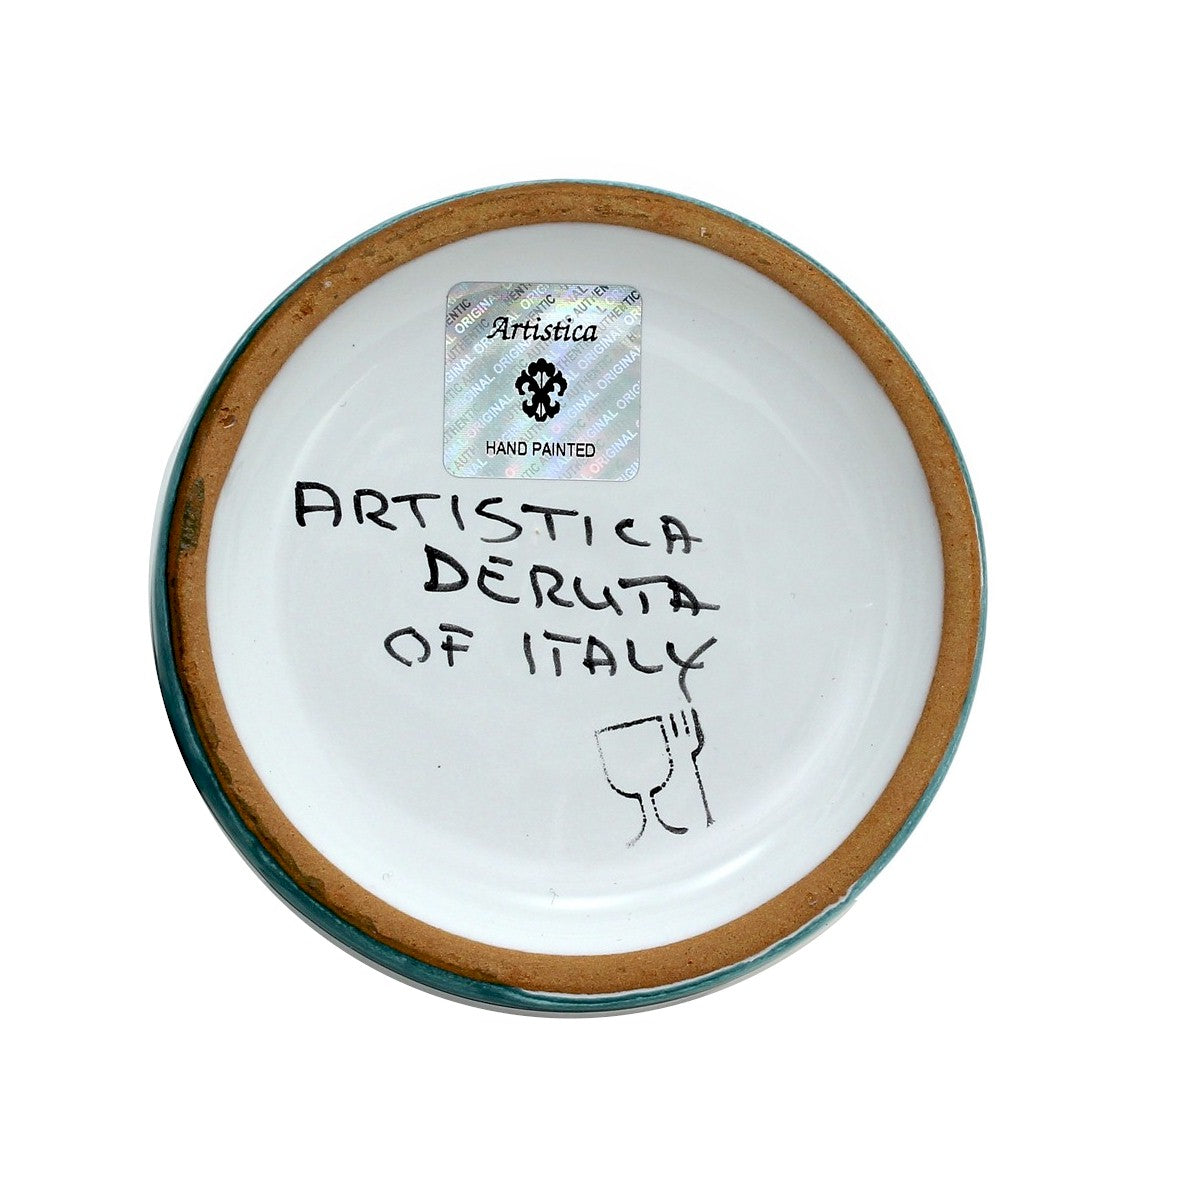 GIFT BOX: With authentic Deruta hand painted ceramic - DERUTA COLORI: OLIVE OIL DISPENSER BOTTLE AQUA/TEAL